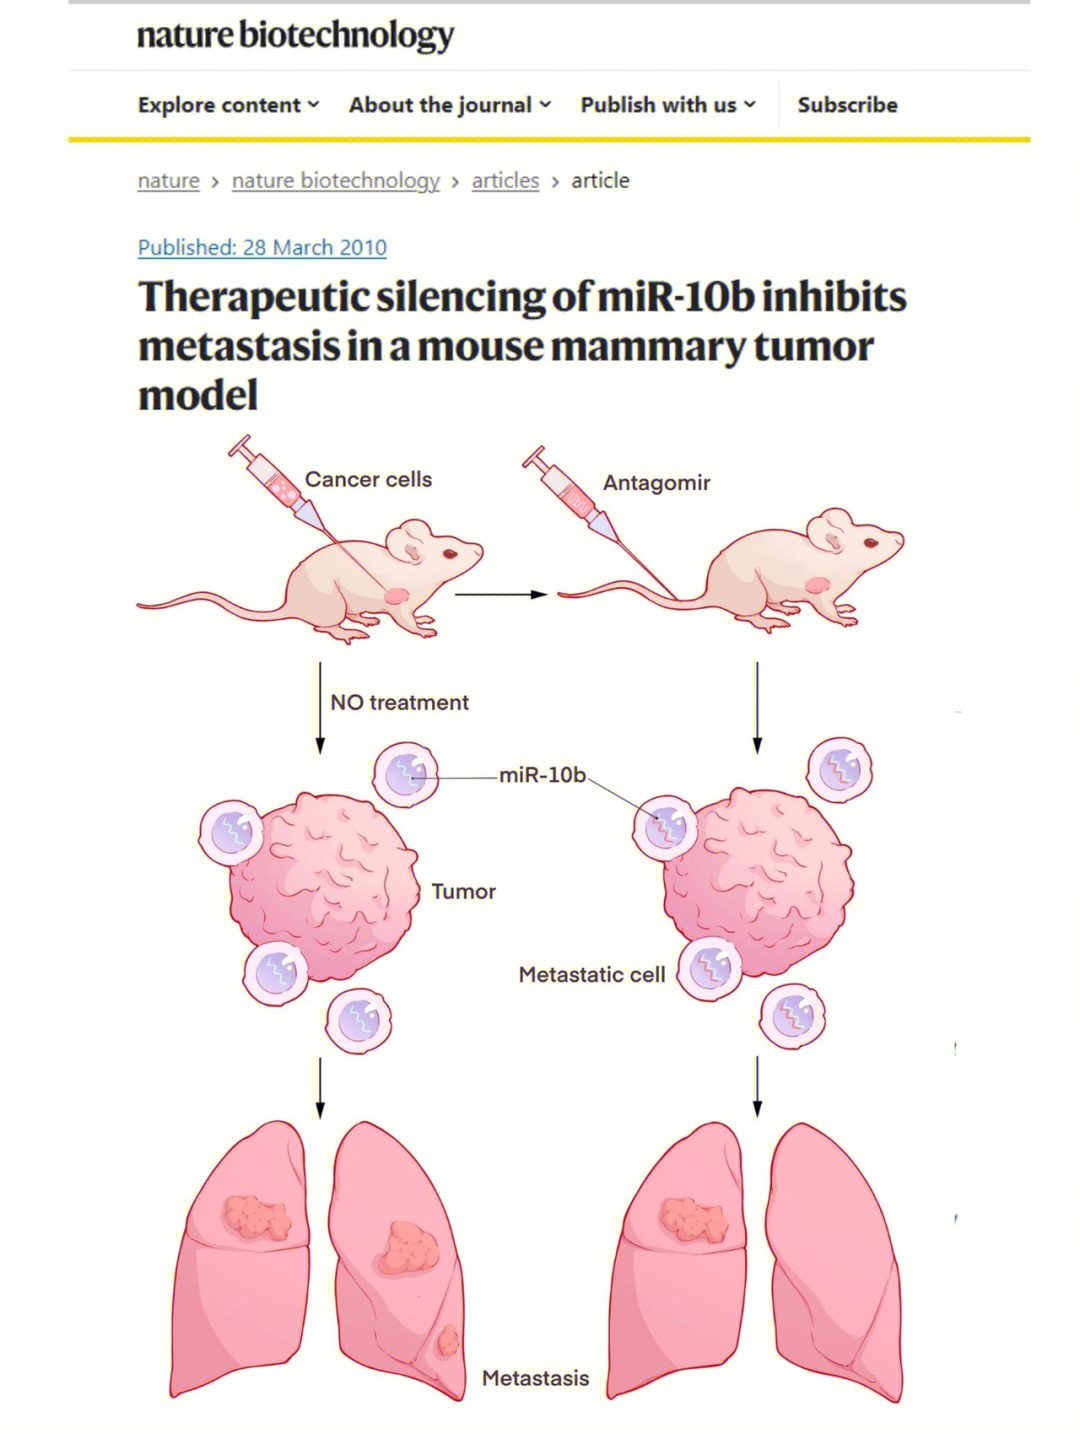 10b antagomirs对小鼠进行全身治疗可抑制乳腺癌的转移●施用mir